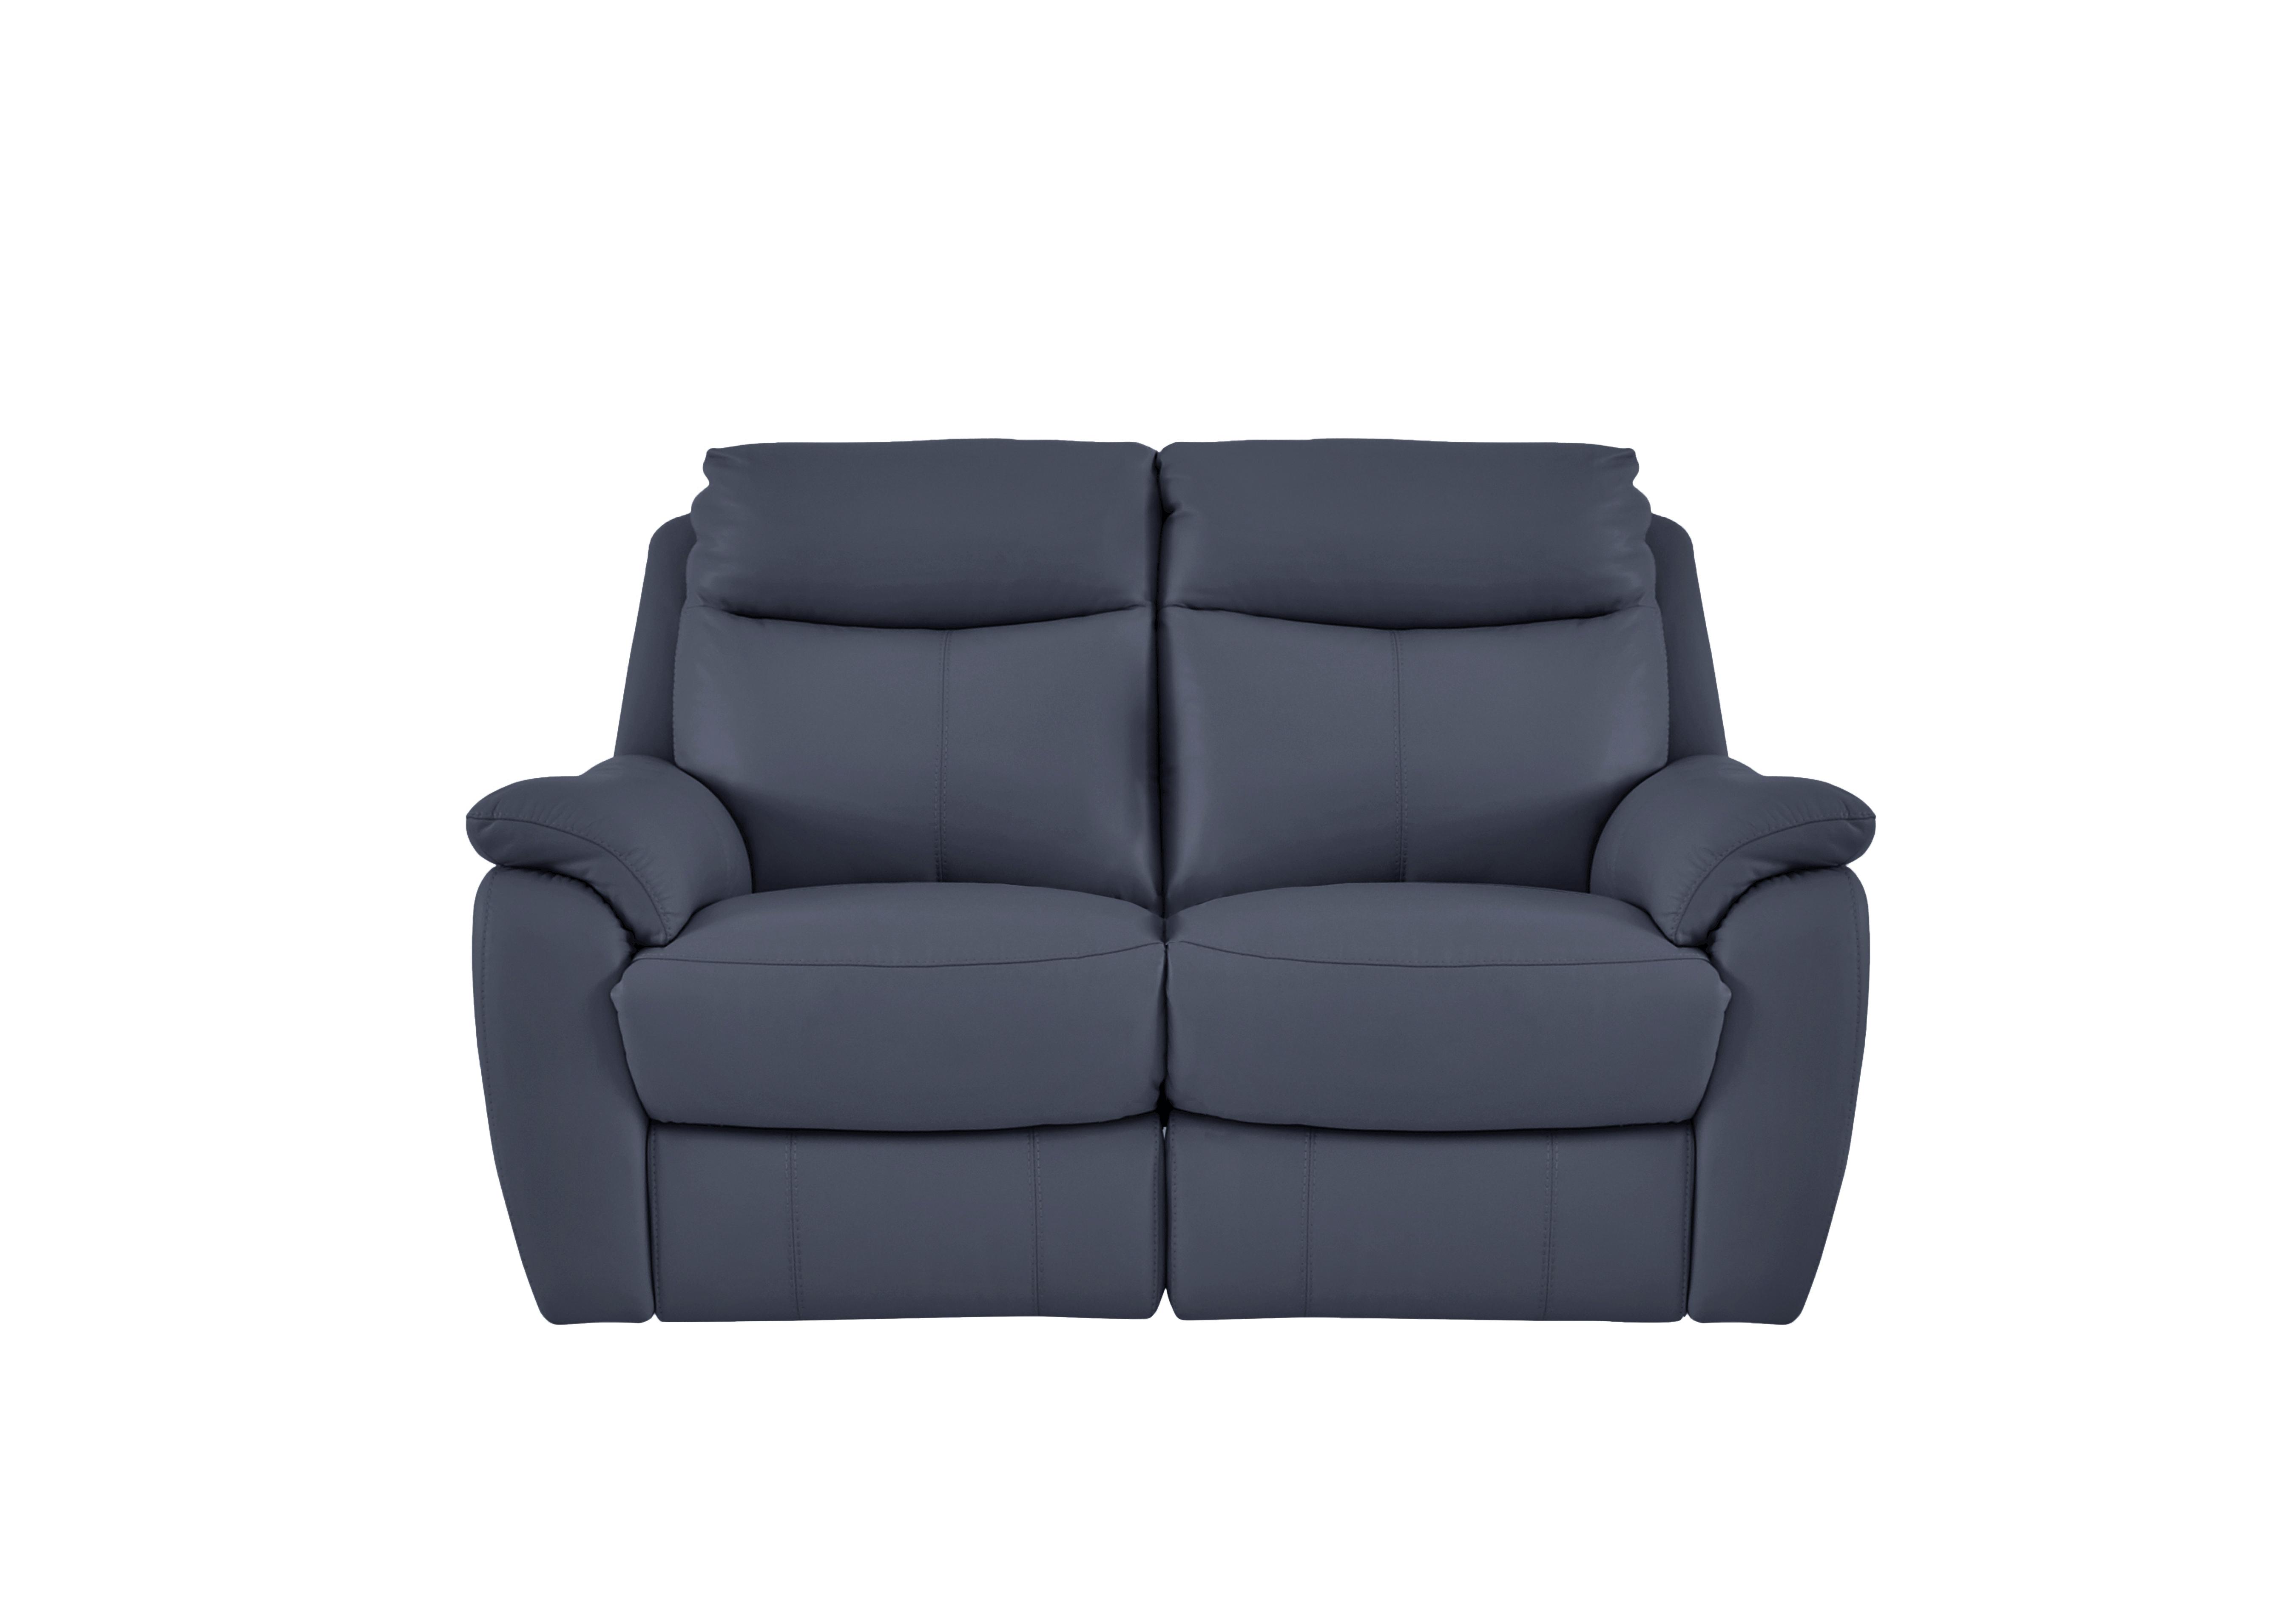 Snug 2 Seater Leather Sofa in Bv-313e Ocean Blue on Furniture Village